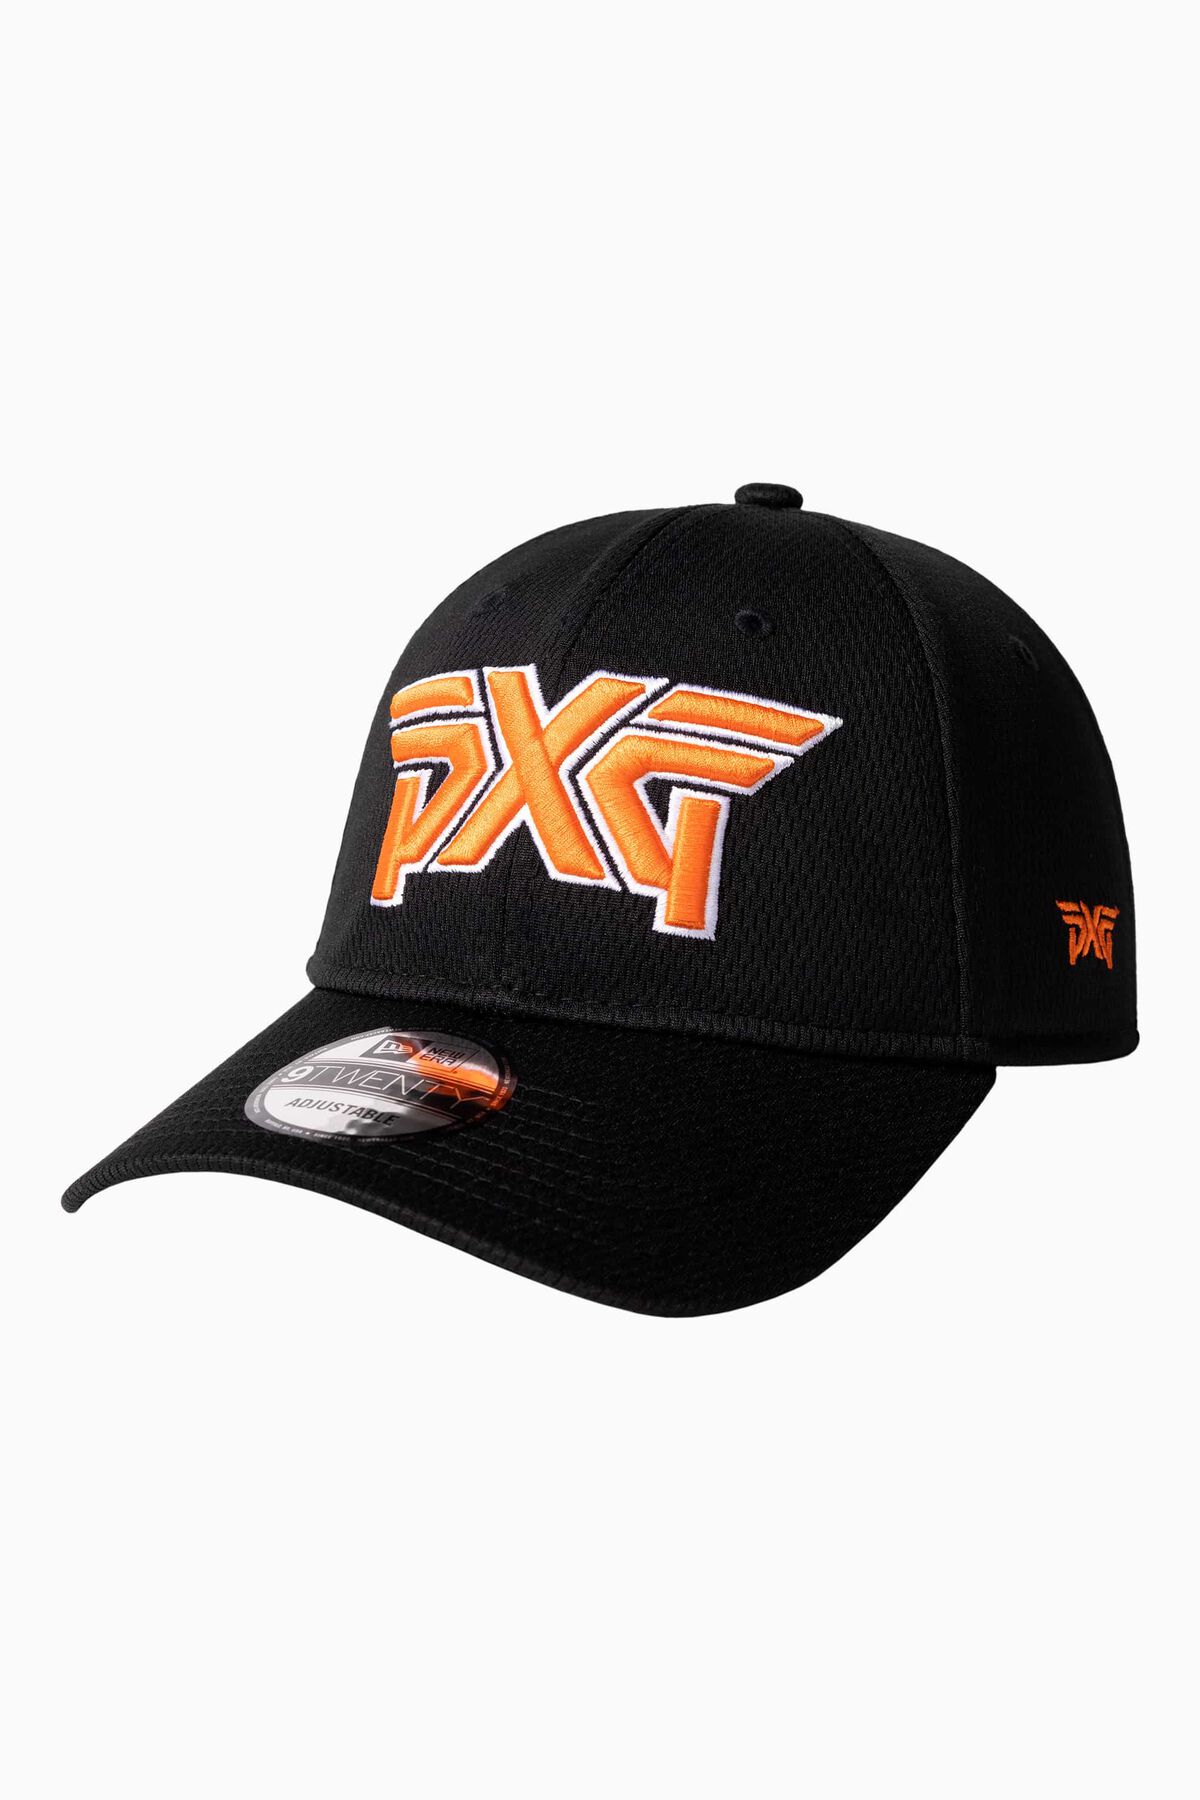 PXG Oklahoma Black/Orange 9TWENTY Adjustable Cap 